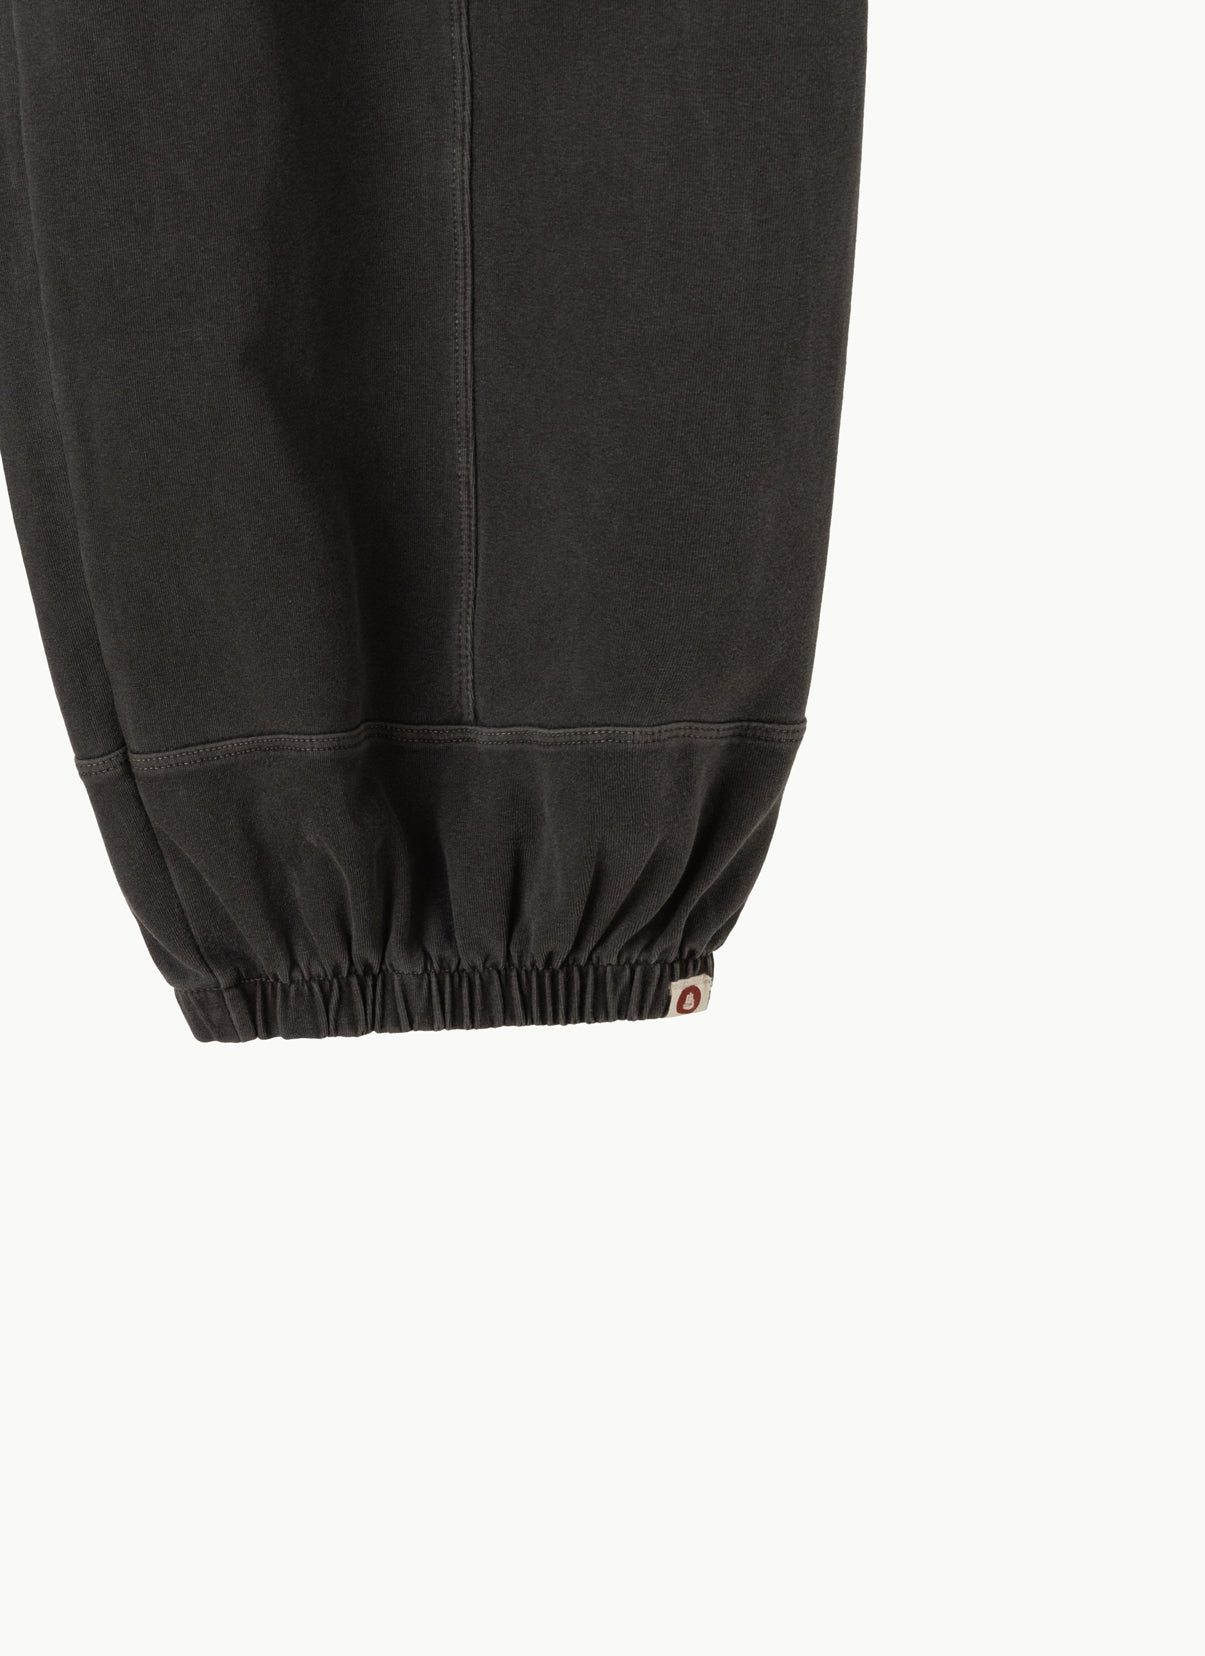 Wrap pocket pants (Unisex)_Charcoal